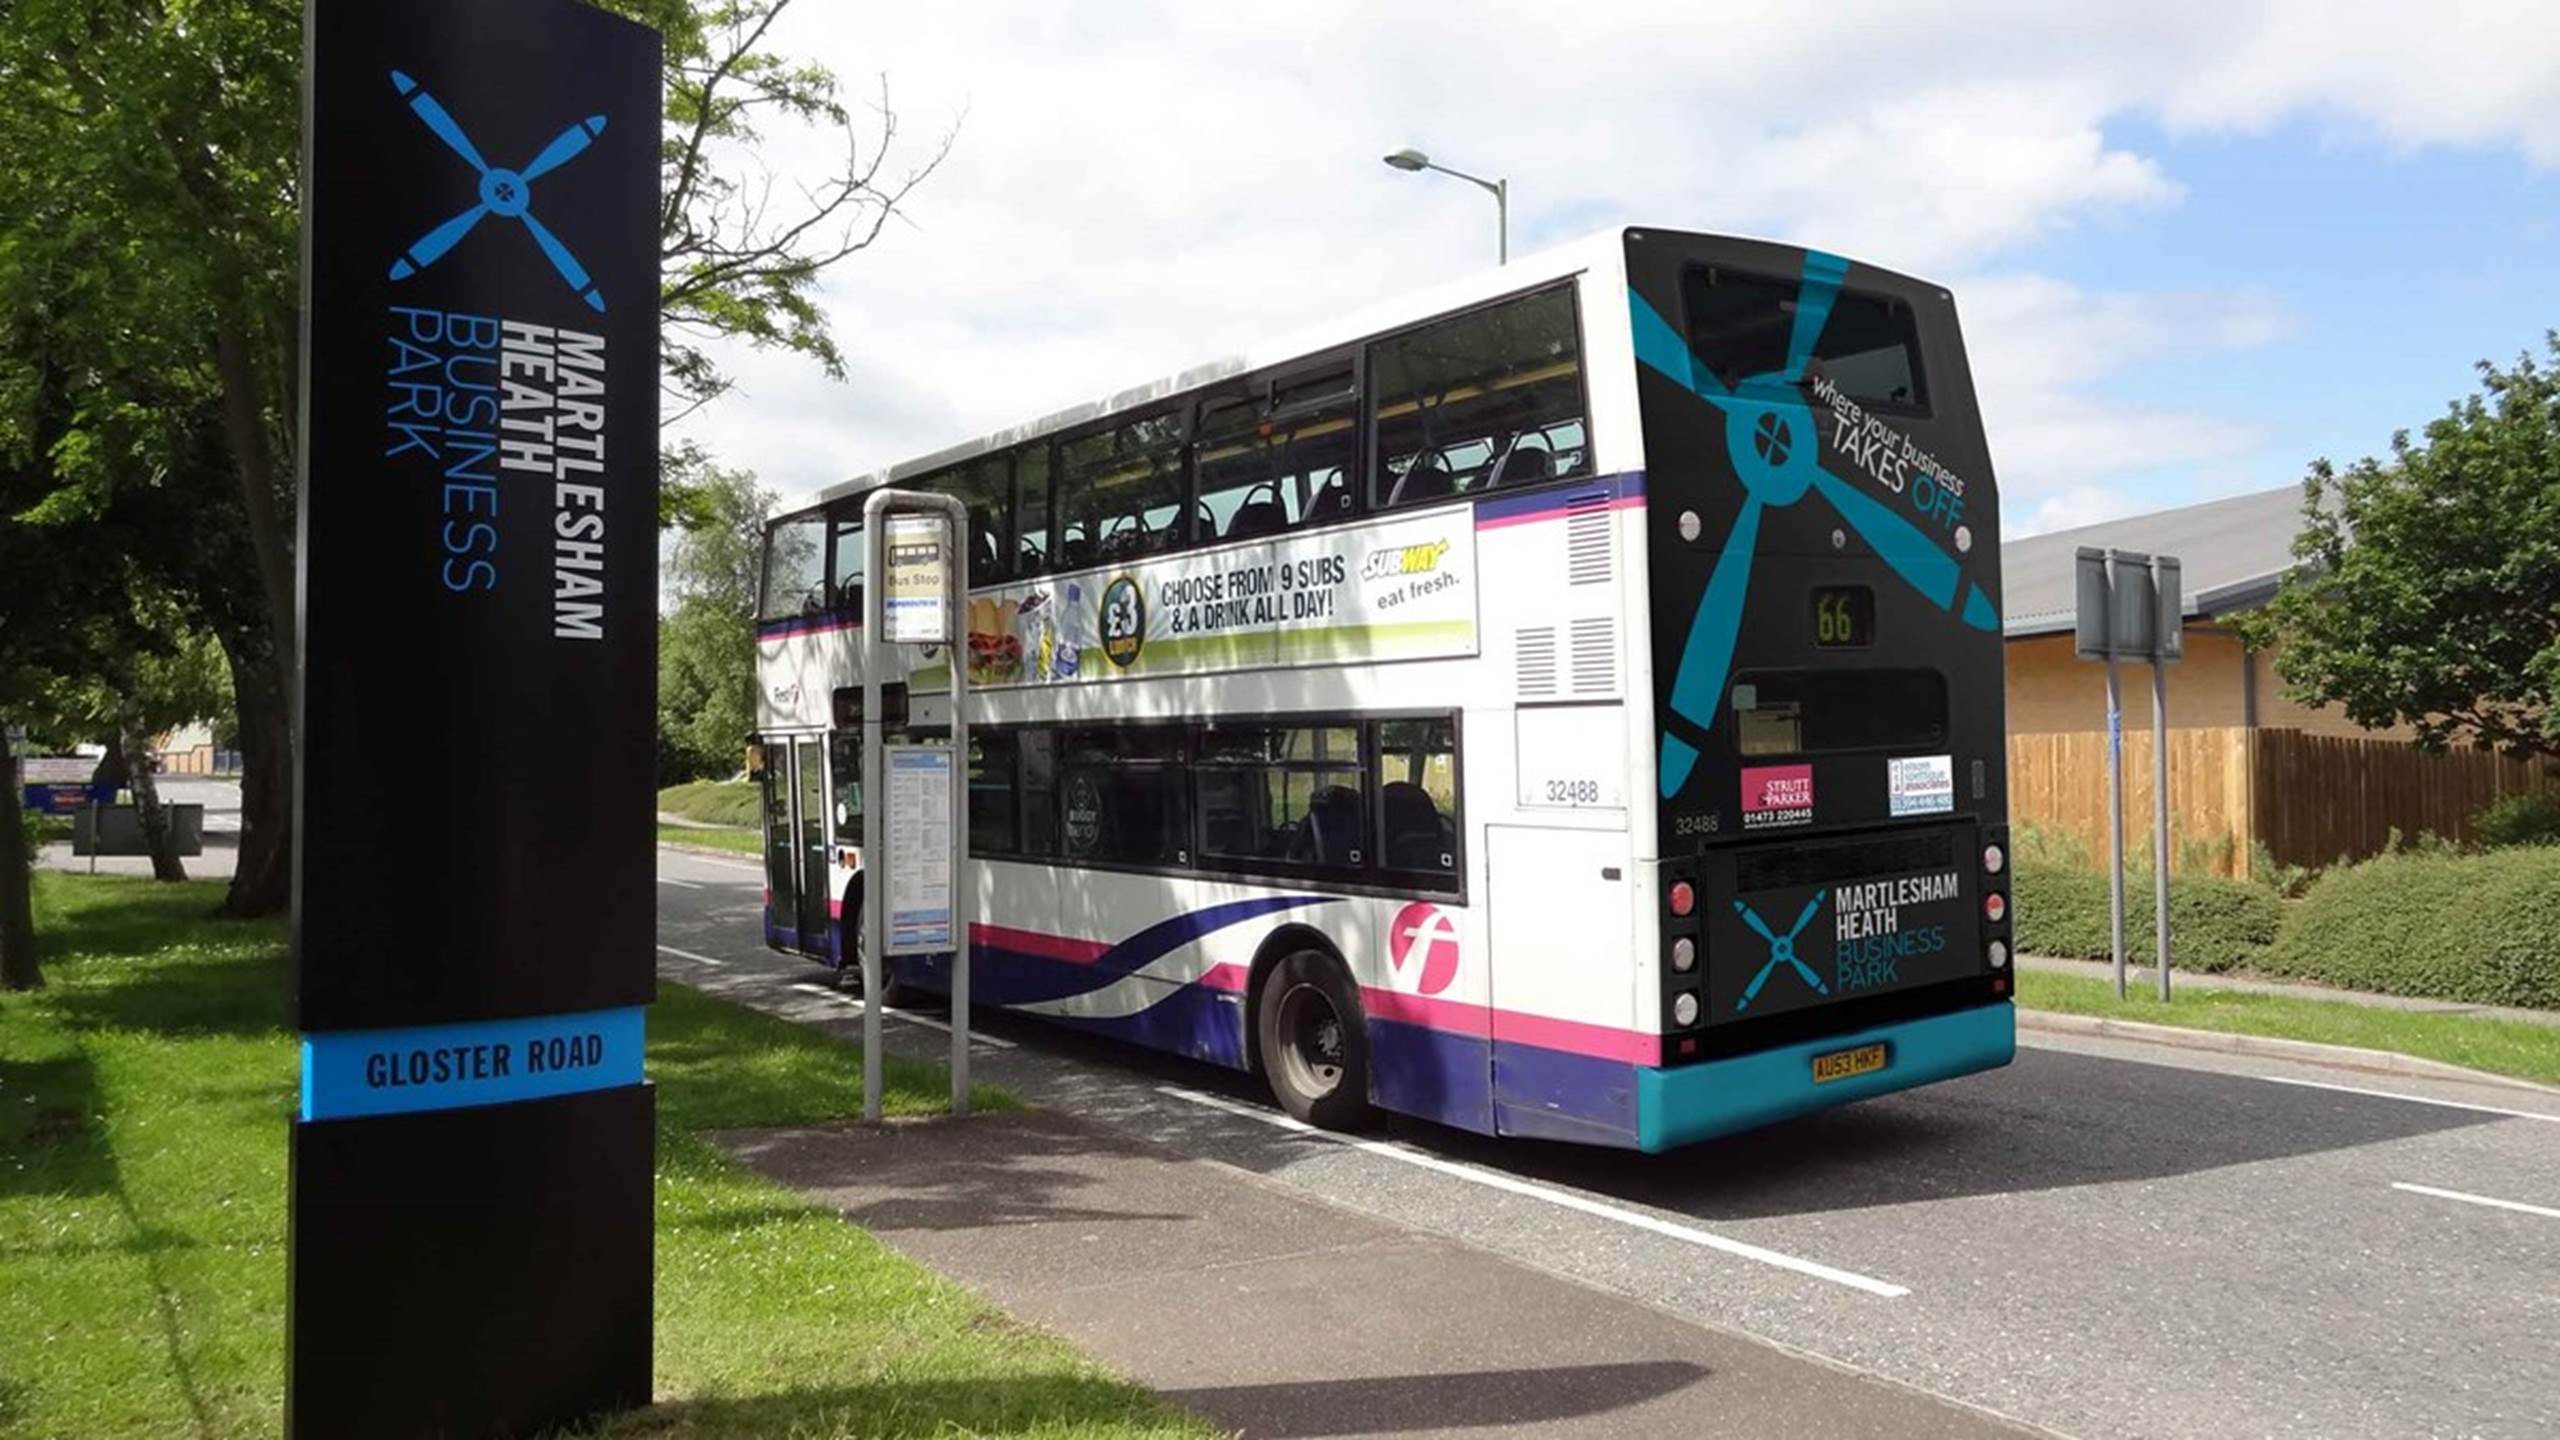 Martlesham Heath Business Park Bus and sign advertisement